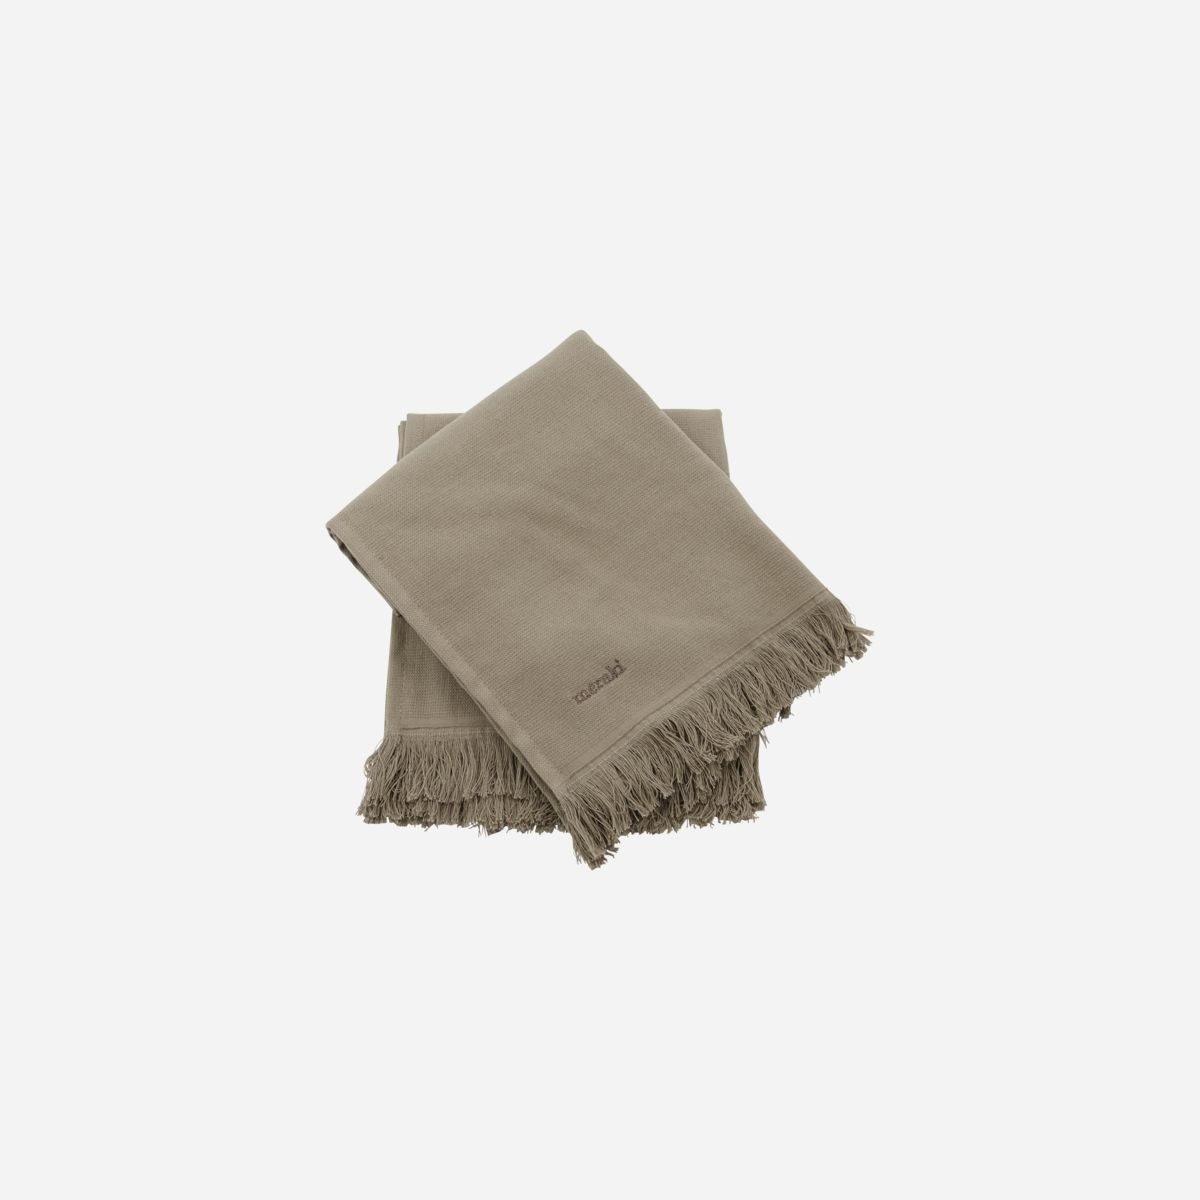 Håndklæde, Lunaria, Varm grå 40x60 cm, 2 stk